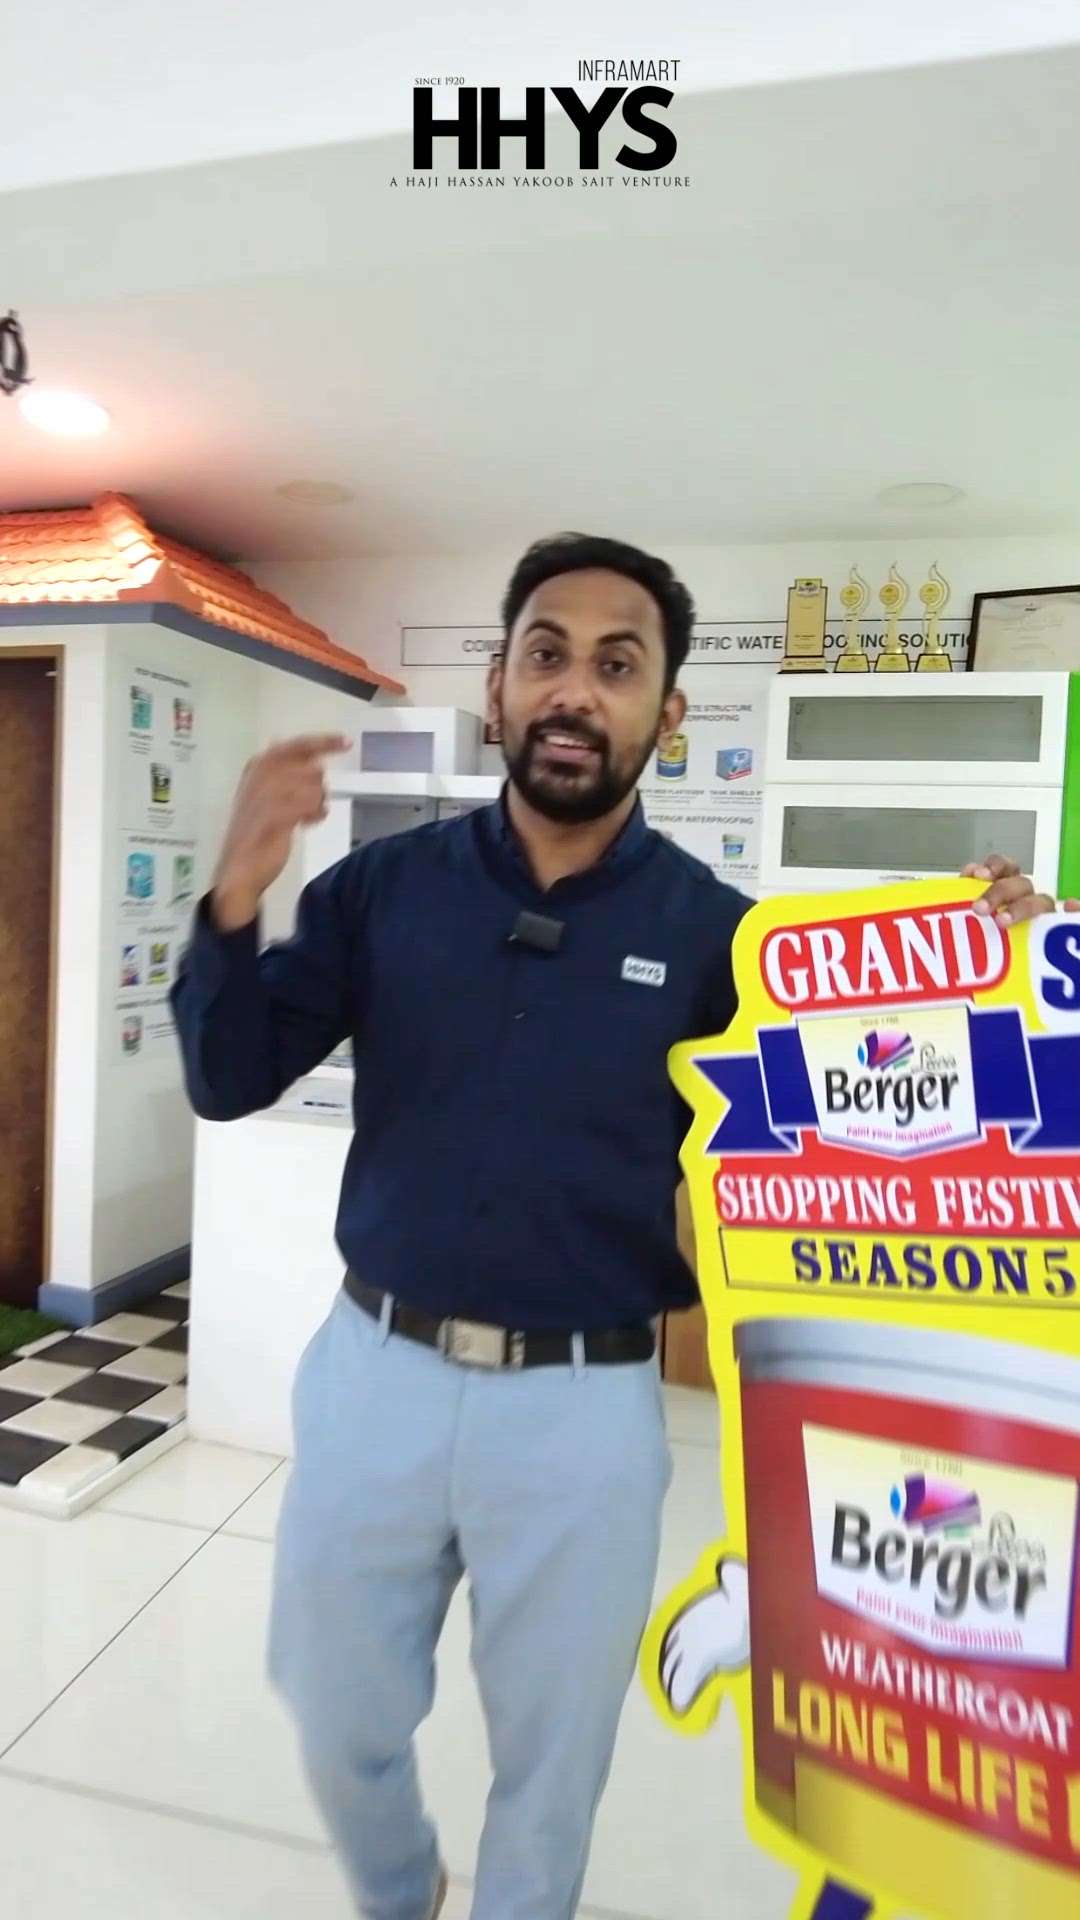 Grand Berger Shopping Festival Season 5
5000  രൂപയ്ക്കു മുകളിൽ Berger പെയിന്റ് ഉത്പന്നങ്ങൾ വാങ്ങിക്കൊണ്ടു ഈ ഫെസ്റ്റിവലിൽ പങ്കെടുക്കാൻ സാധിക്കും.
  ആഴ്ച തോറുമുള്ള നറുക്കെടുപ്പിൽ 7000 രൂപയുടെ സമ്മാനങ്ങളും, ബമ്പർ നറുക്കെടുപ്പിൽ വിജയ്‌ക്കുന്നവർക്കു സ്വിട്സർലാൻഡിലോ , മലേഷ്യയിലോ ഹോളിഡേയ് ആഘോഷിക്കാം.

#wallpaint #wallart #art #wallpainting #urbanart #graffiti #streetart #painting #paint #wall #interiordesign #homedecor #muralart #walldecor #graffitiart #homepainting #decorpaint #mural #interior #housepainting #decorpainting #painter #paintingcontractor #artist #design #renovation #sprayart #spraypaint #officepainting #paintingproject